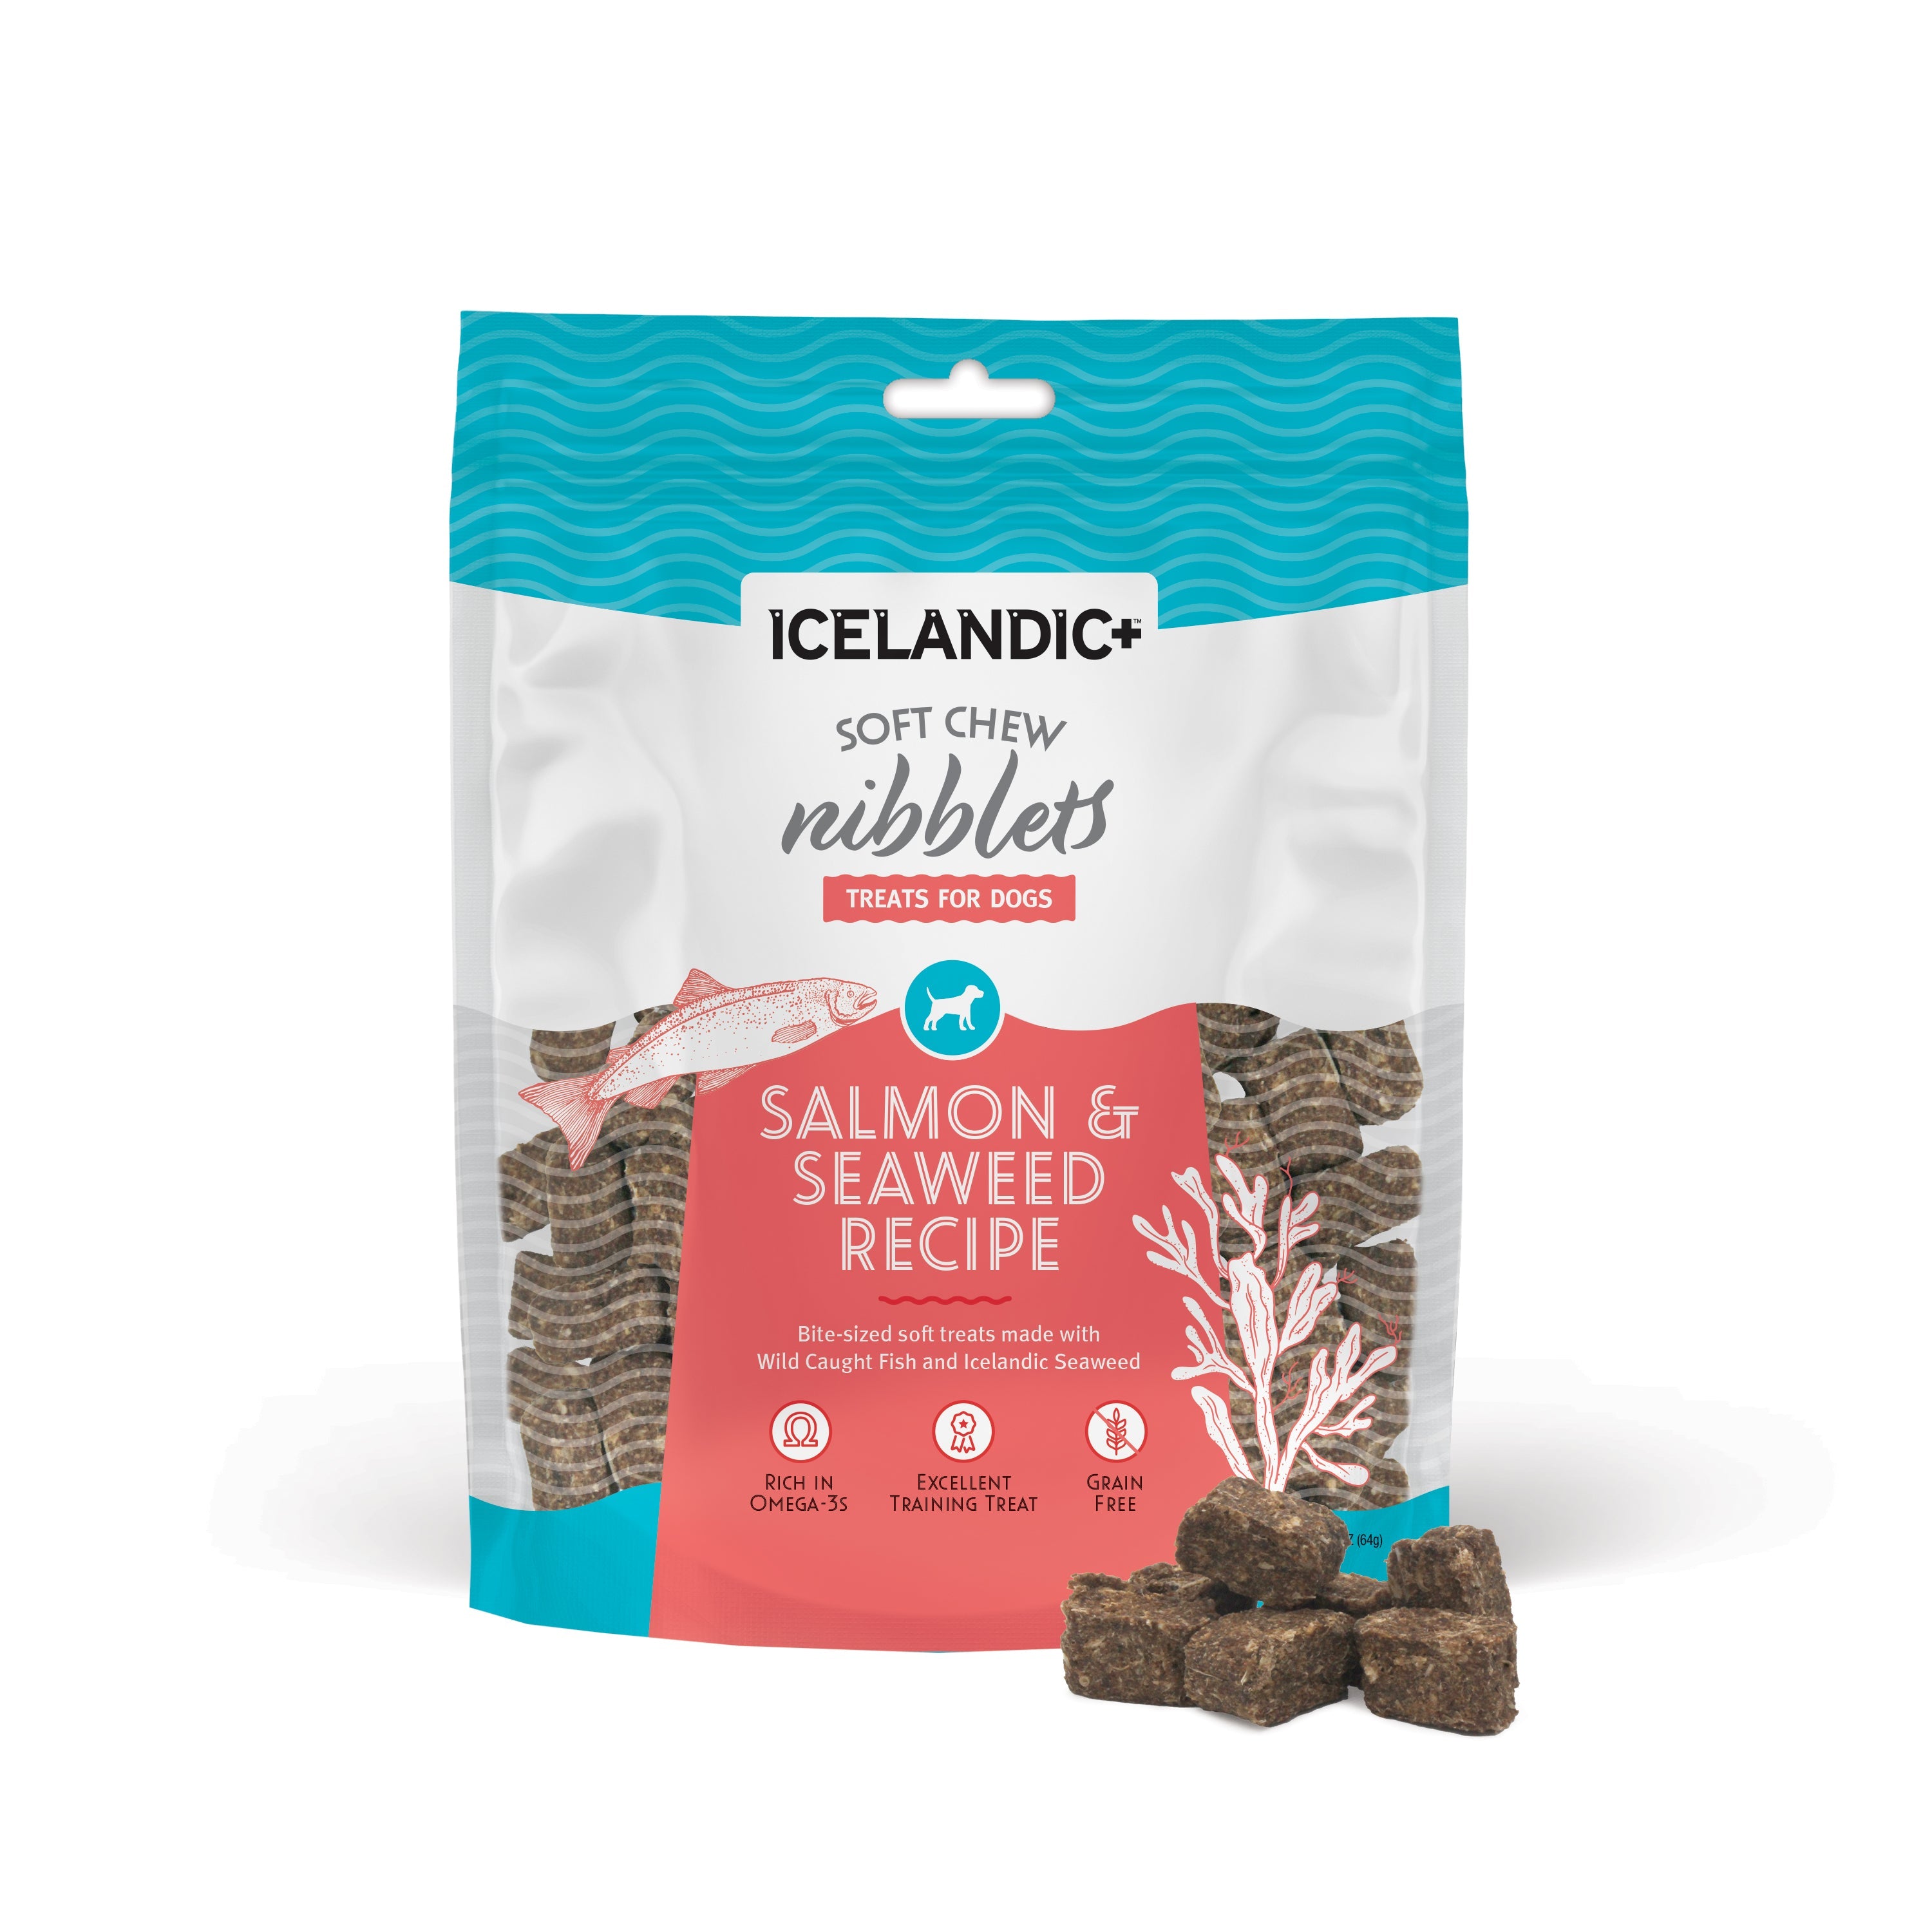 Icelandic+ Nibblets Salmon & Seaweed Recipe Soft Dog Treats, 2.25oz